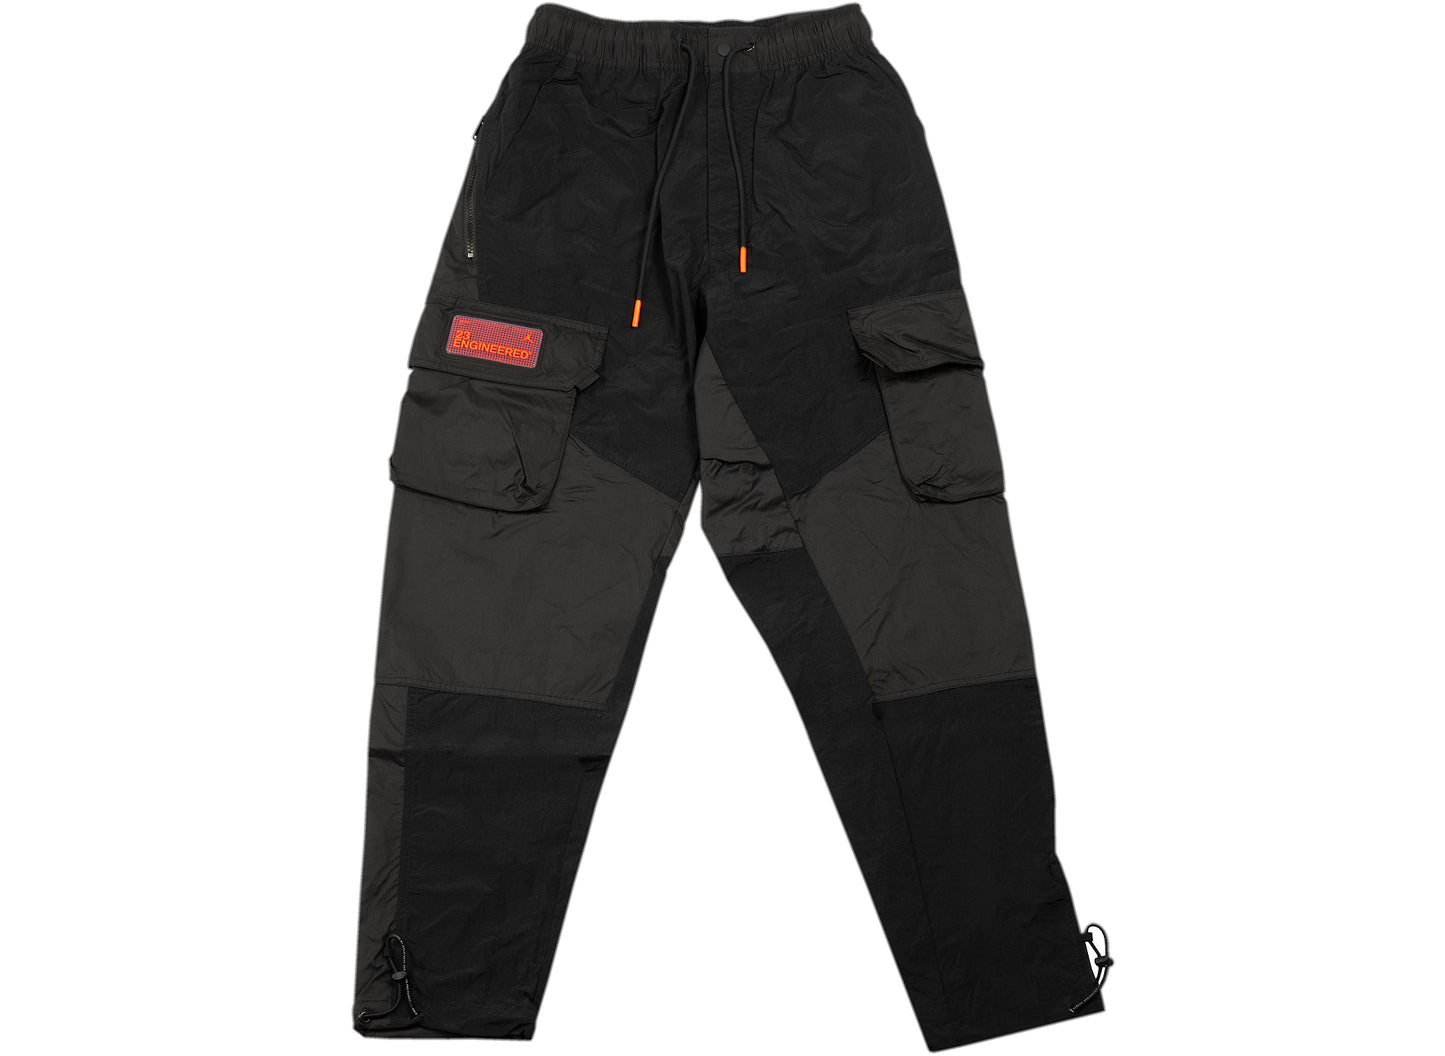 Jordan 23 Engineered Cargo Pants